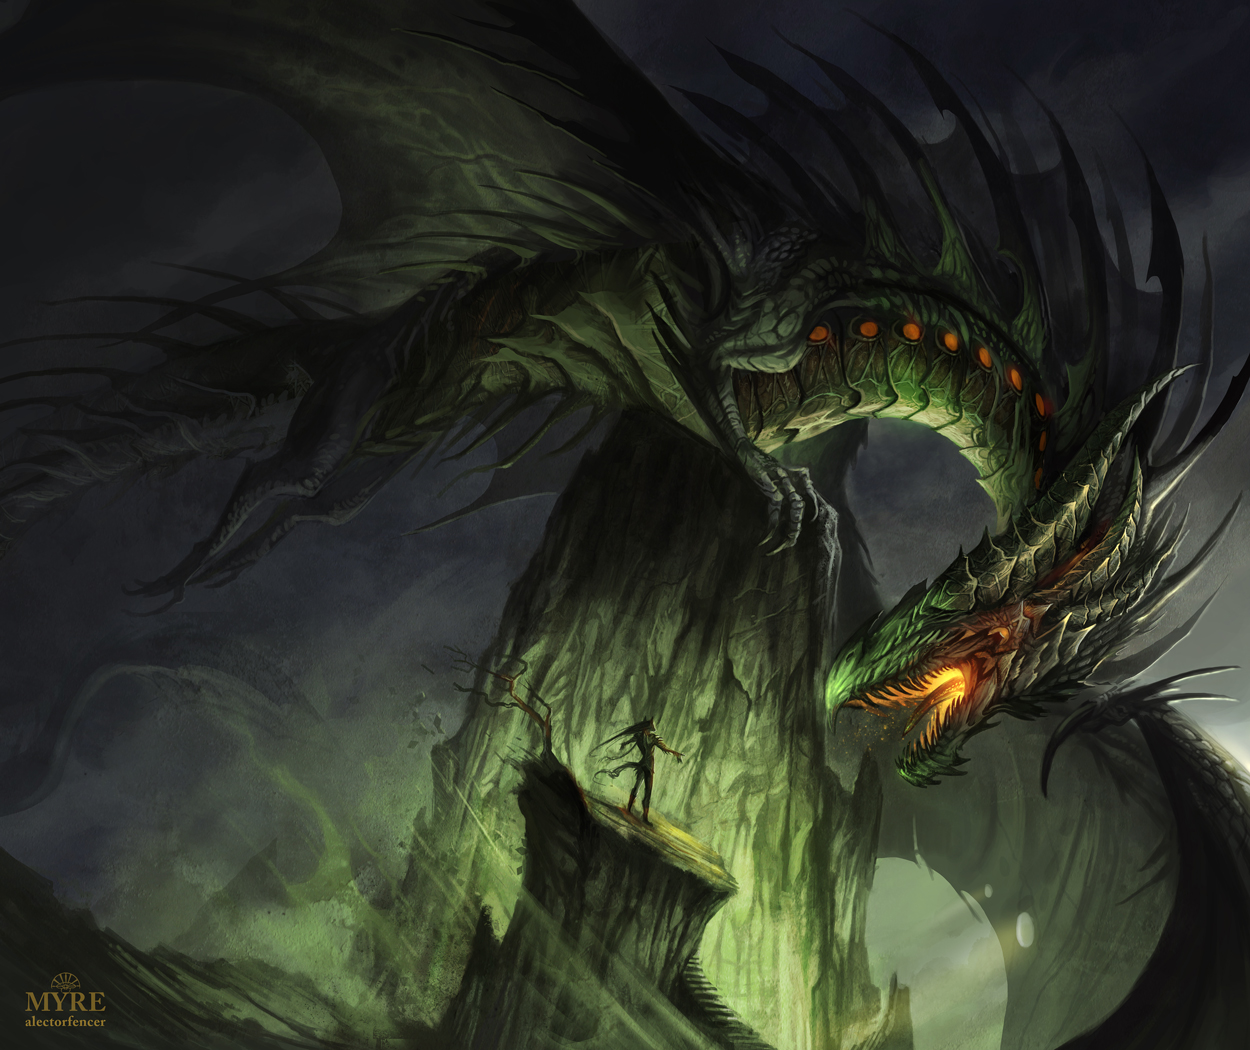 Myre-the Great Black Dragon